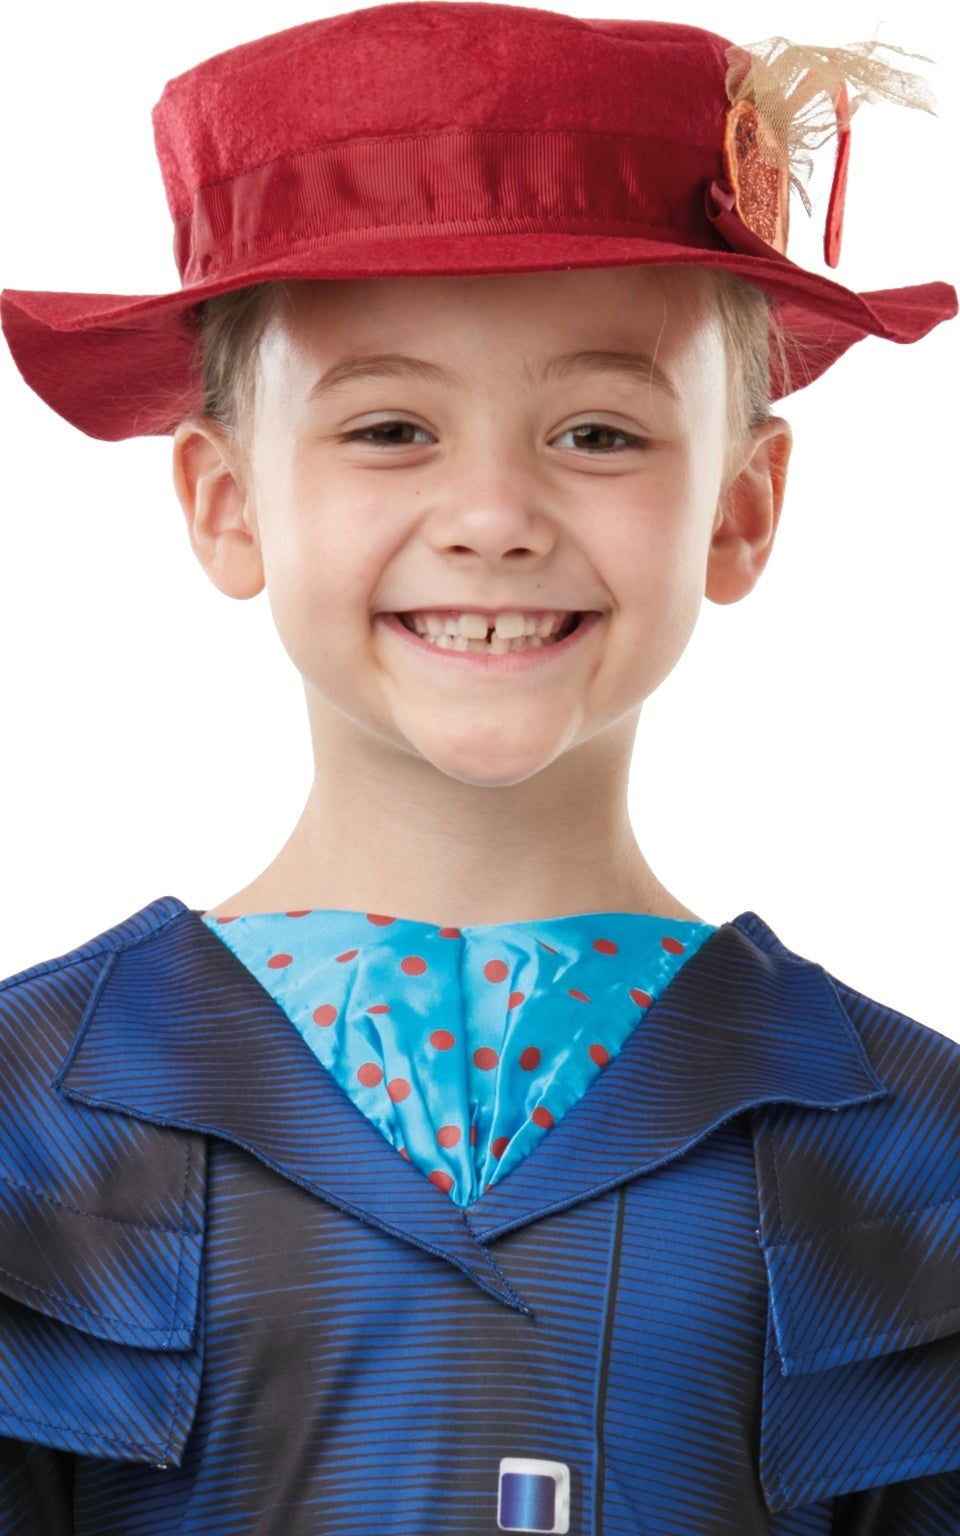 Mary Poppins Returns Costume_4 